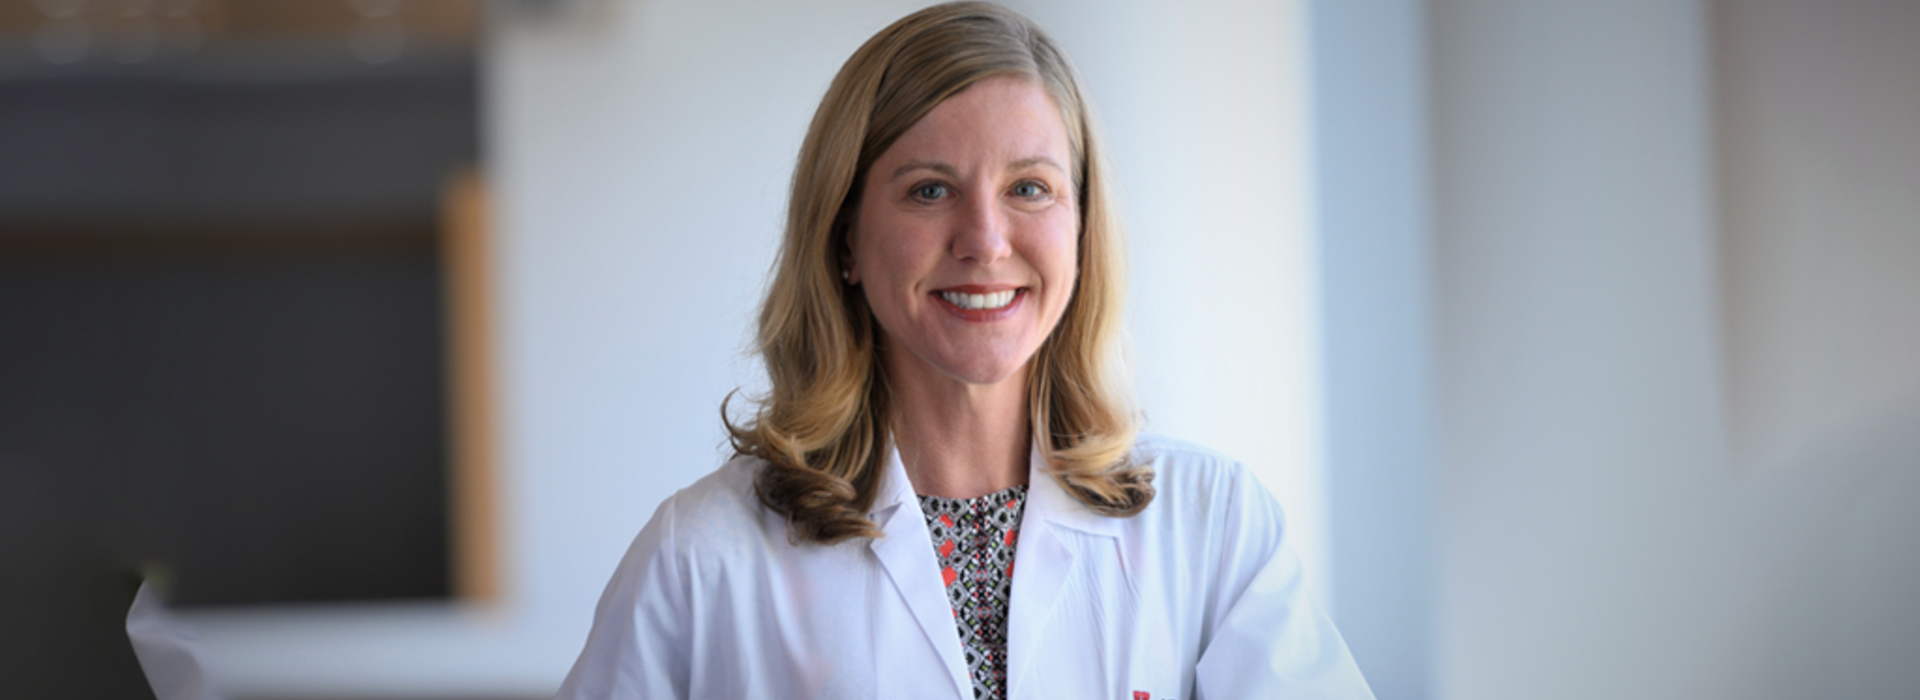 Dr. Thompson Buum Receives Advancing Women in Internal Medicine